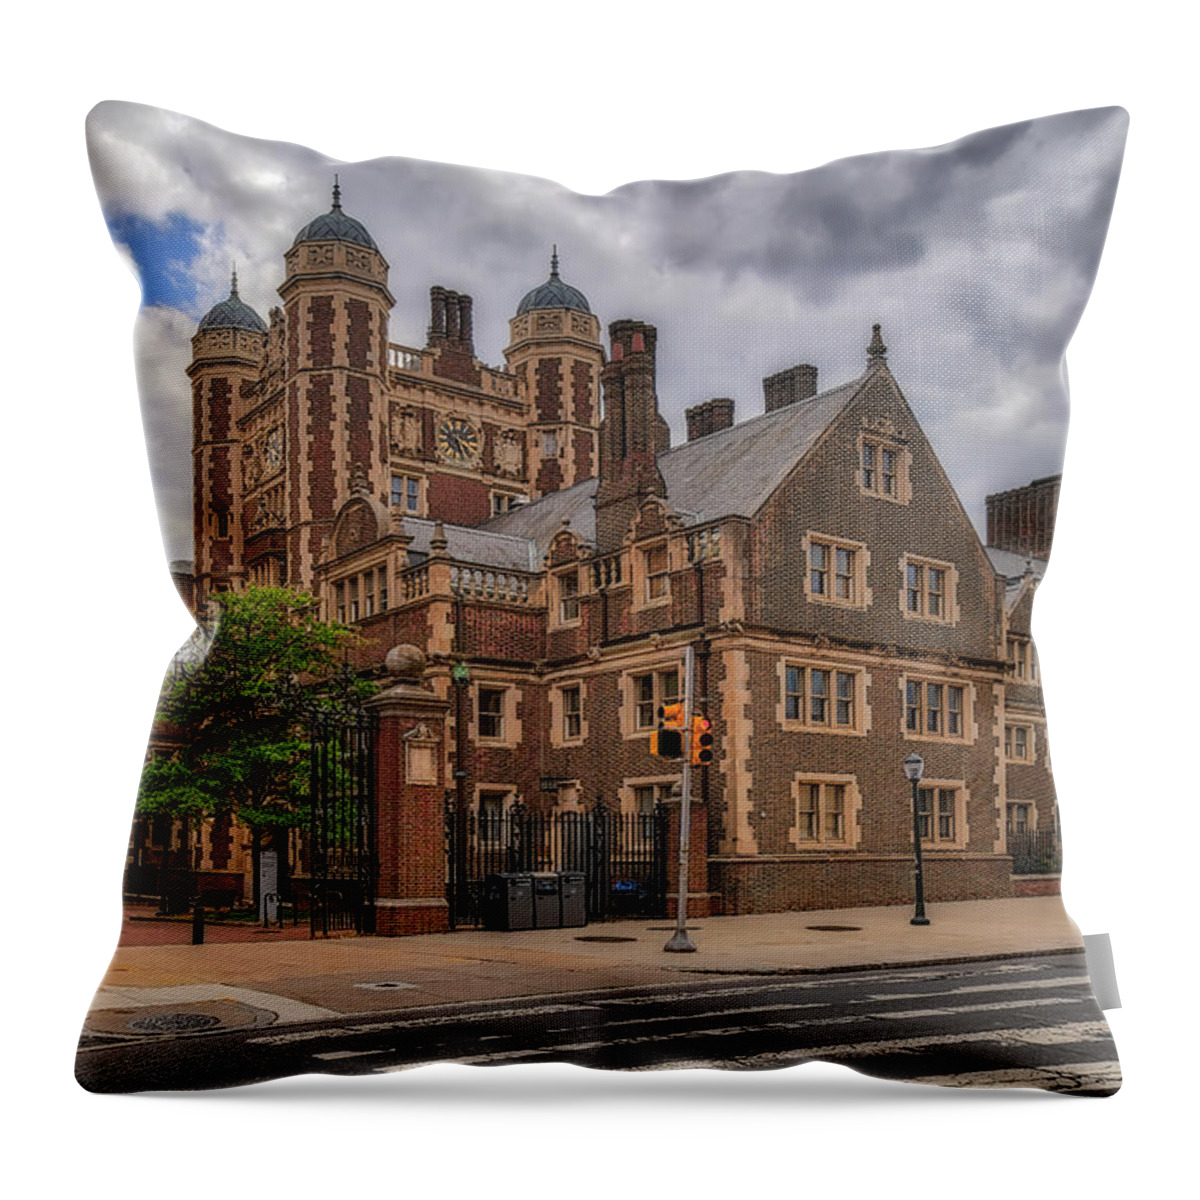 U-penn Throw Pillow featuring the photograph University of Pennsylvania Quadrangle Towers by Susan Candelario